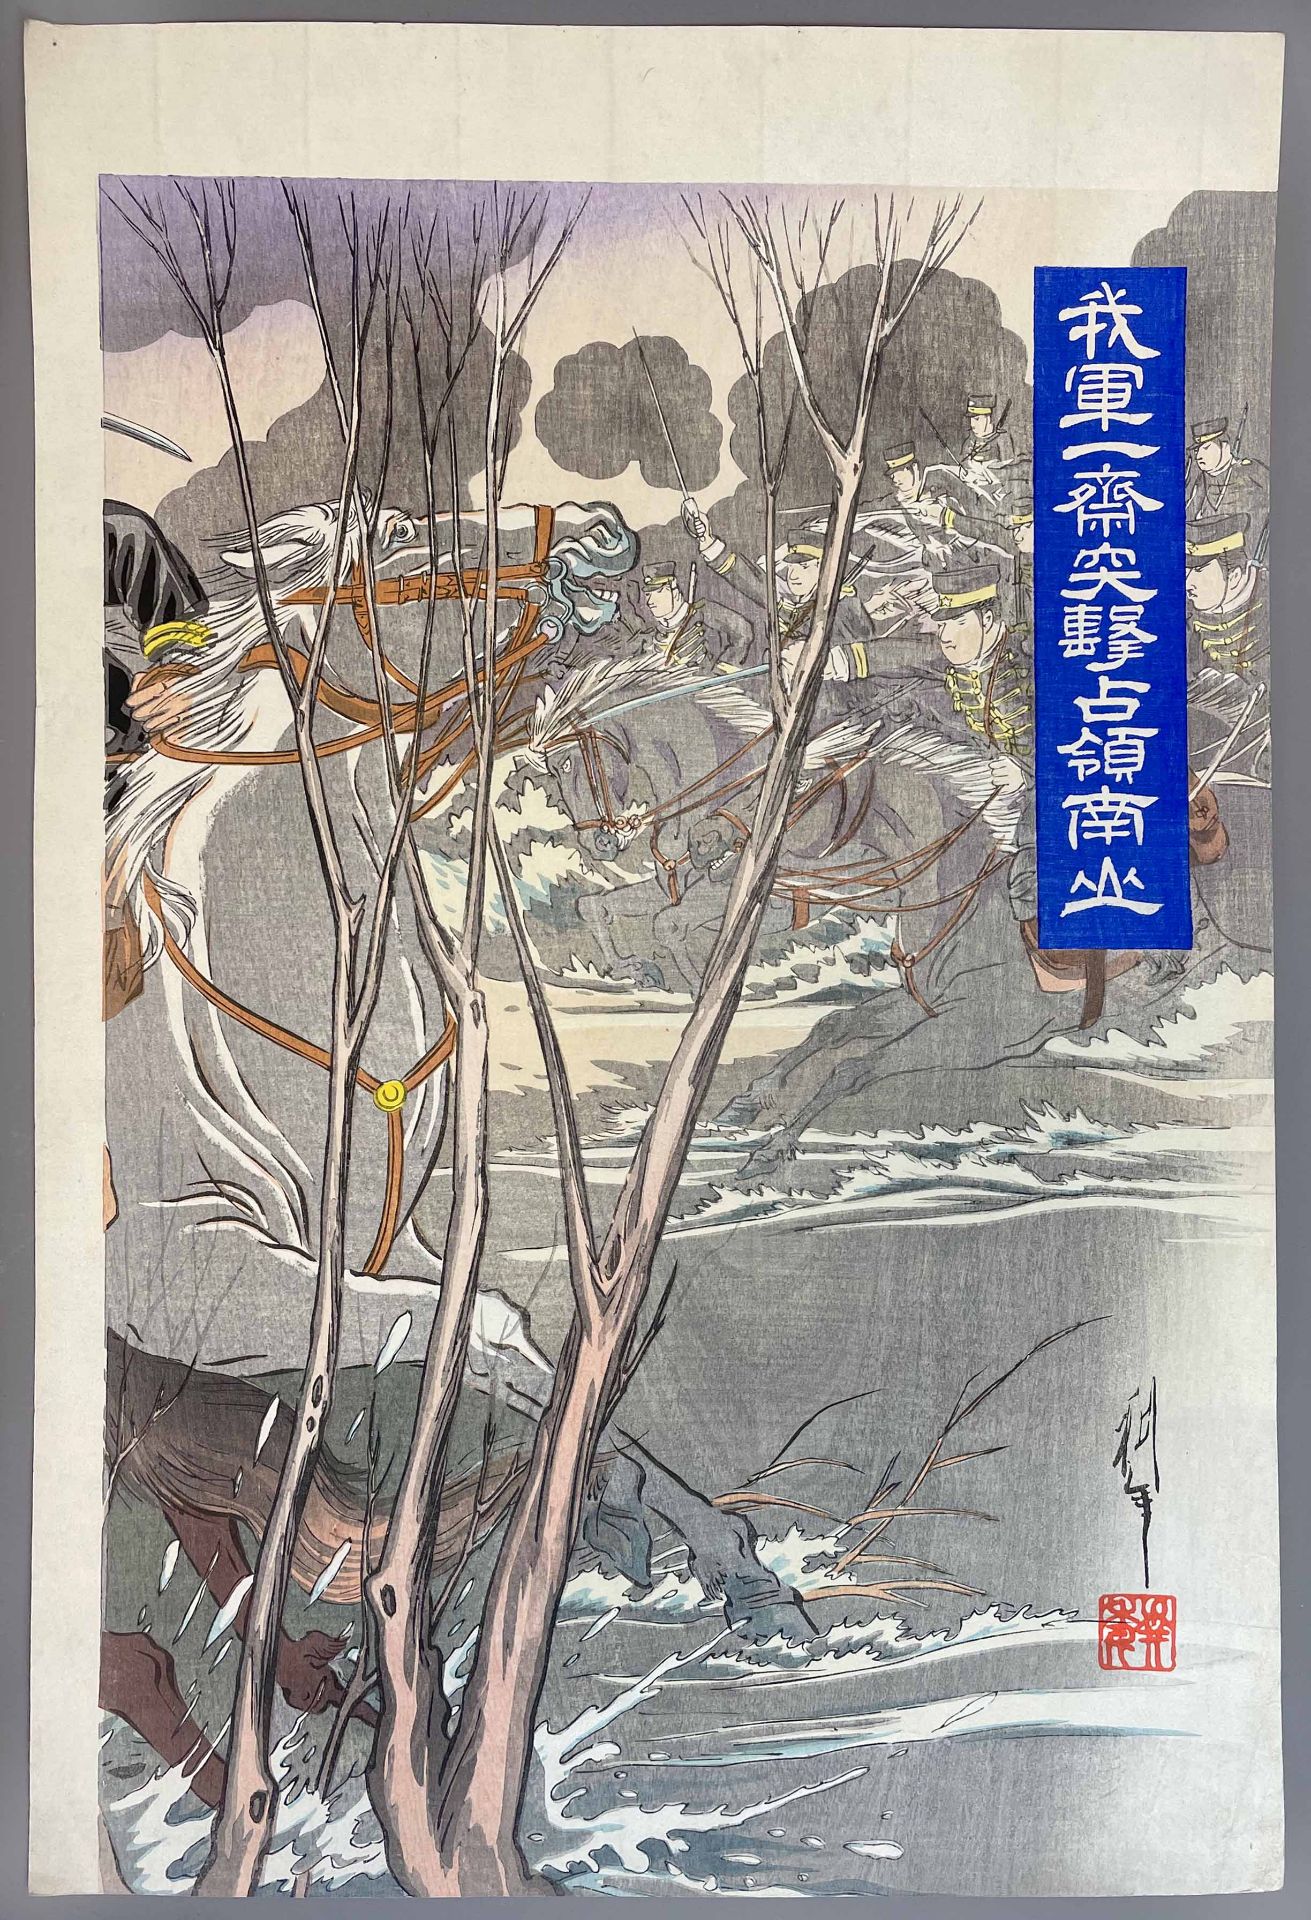 Konvolut Holzschnitte. Japan. 19. / 20. Jahrhundert. Seeschlachten Russisch - Japanischen Krieges, - Image 10 of 12